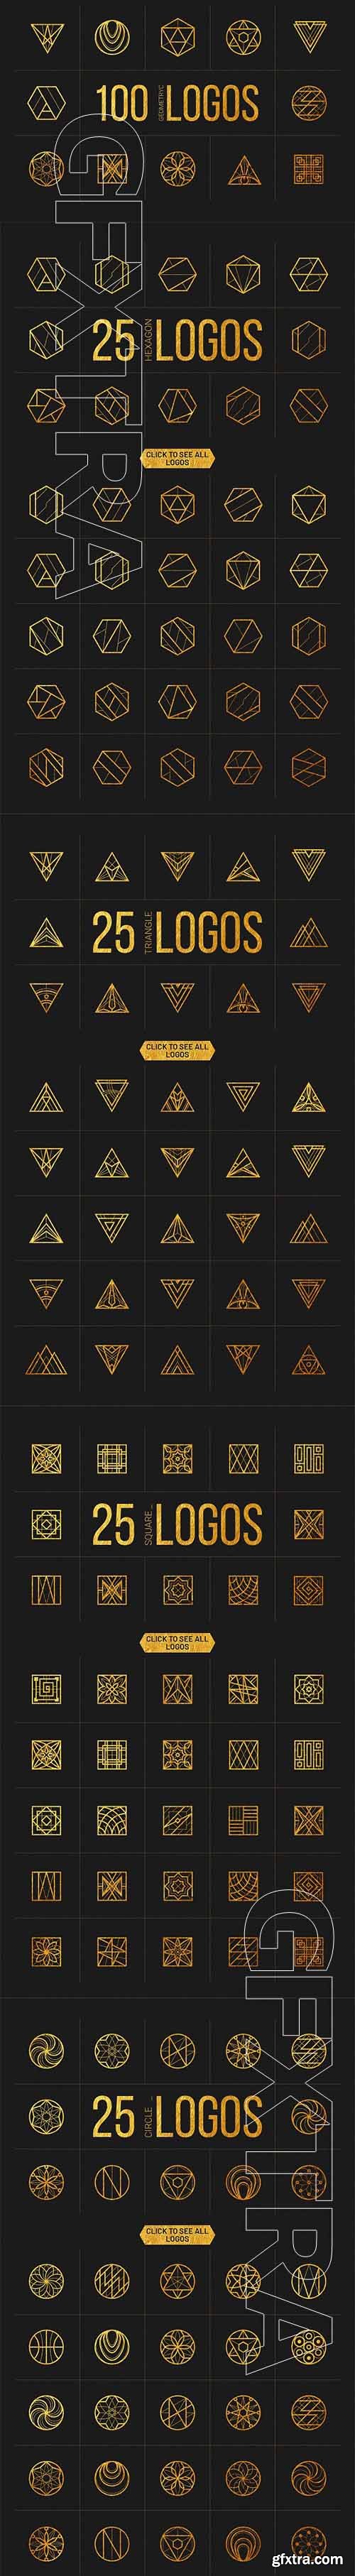 CreativeMarket - 100 Linear Geometric Logos Bundle 2345457